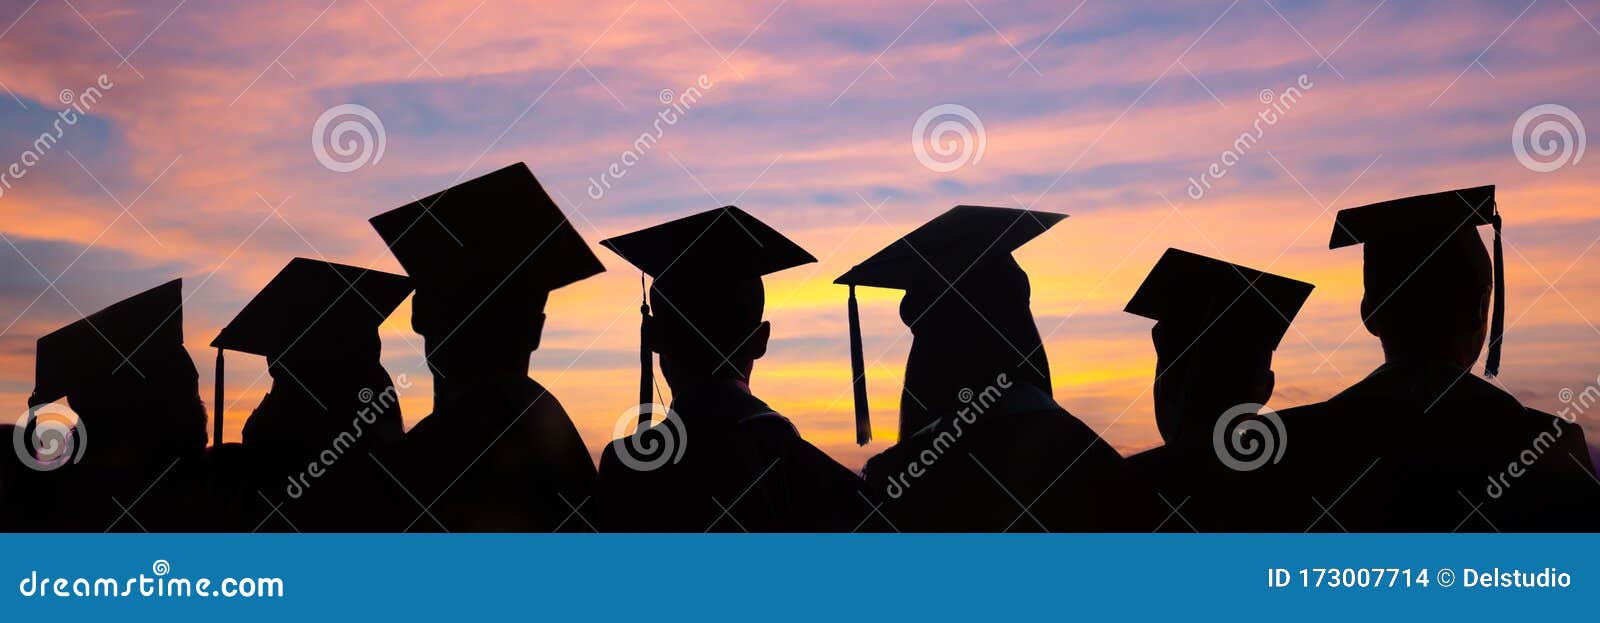 silhouettes-students-graduate-caps-row-s